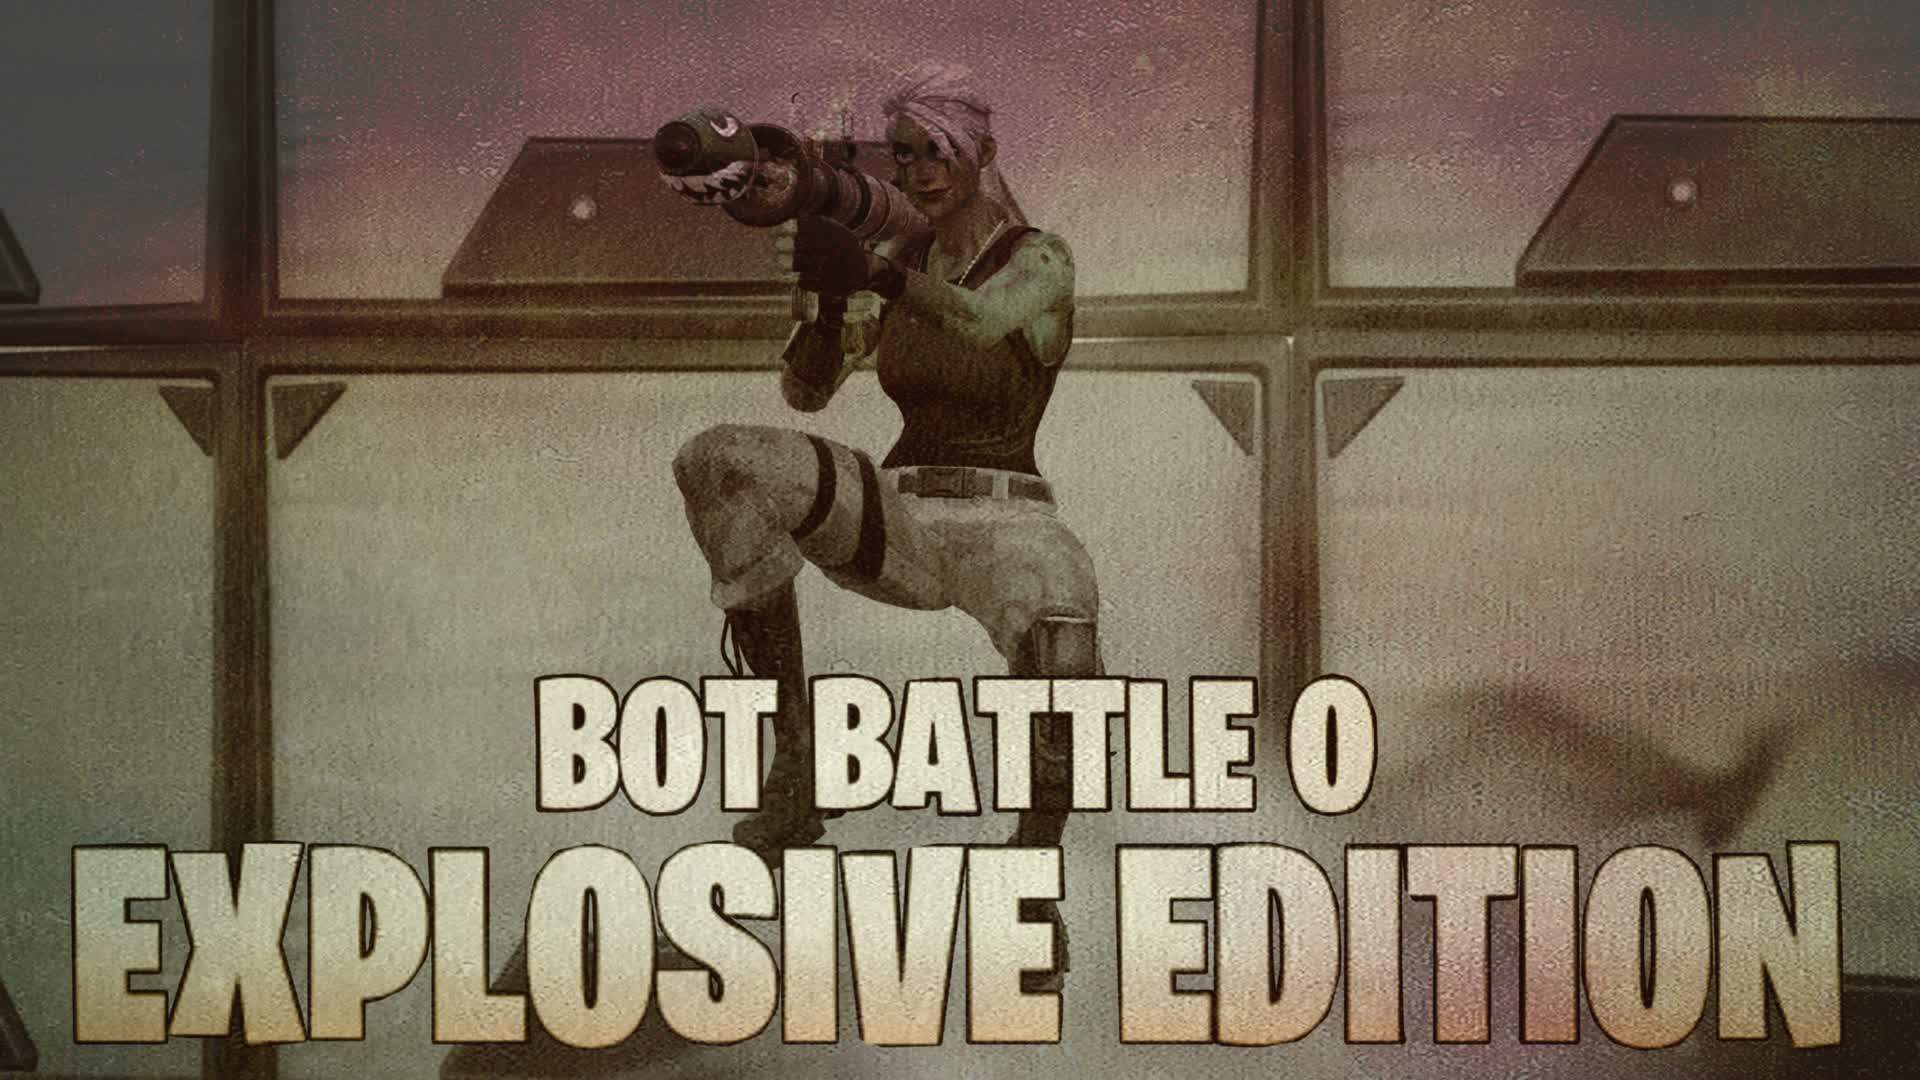 Bot Battle 0: Explosive Edition